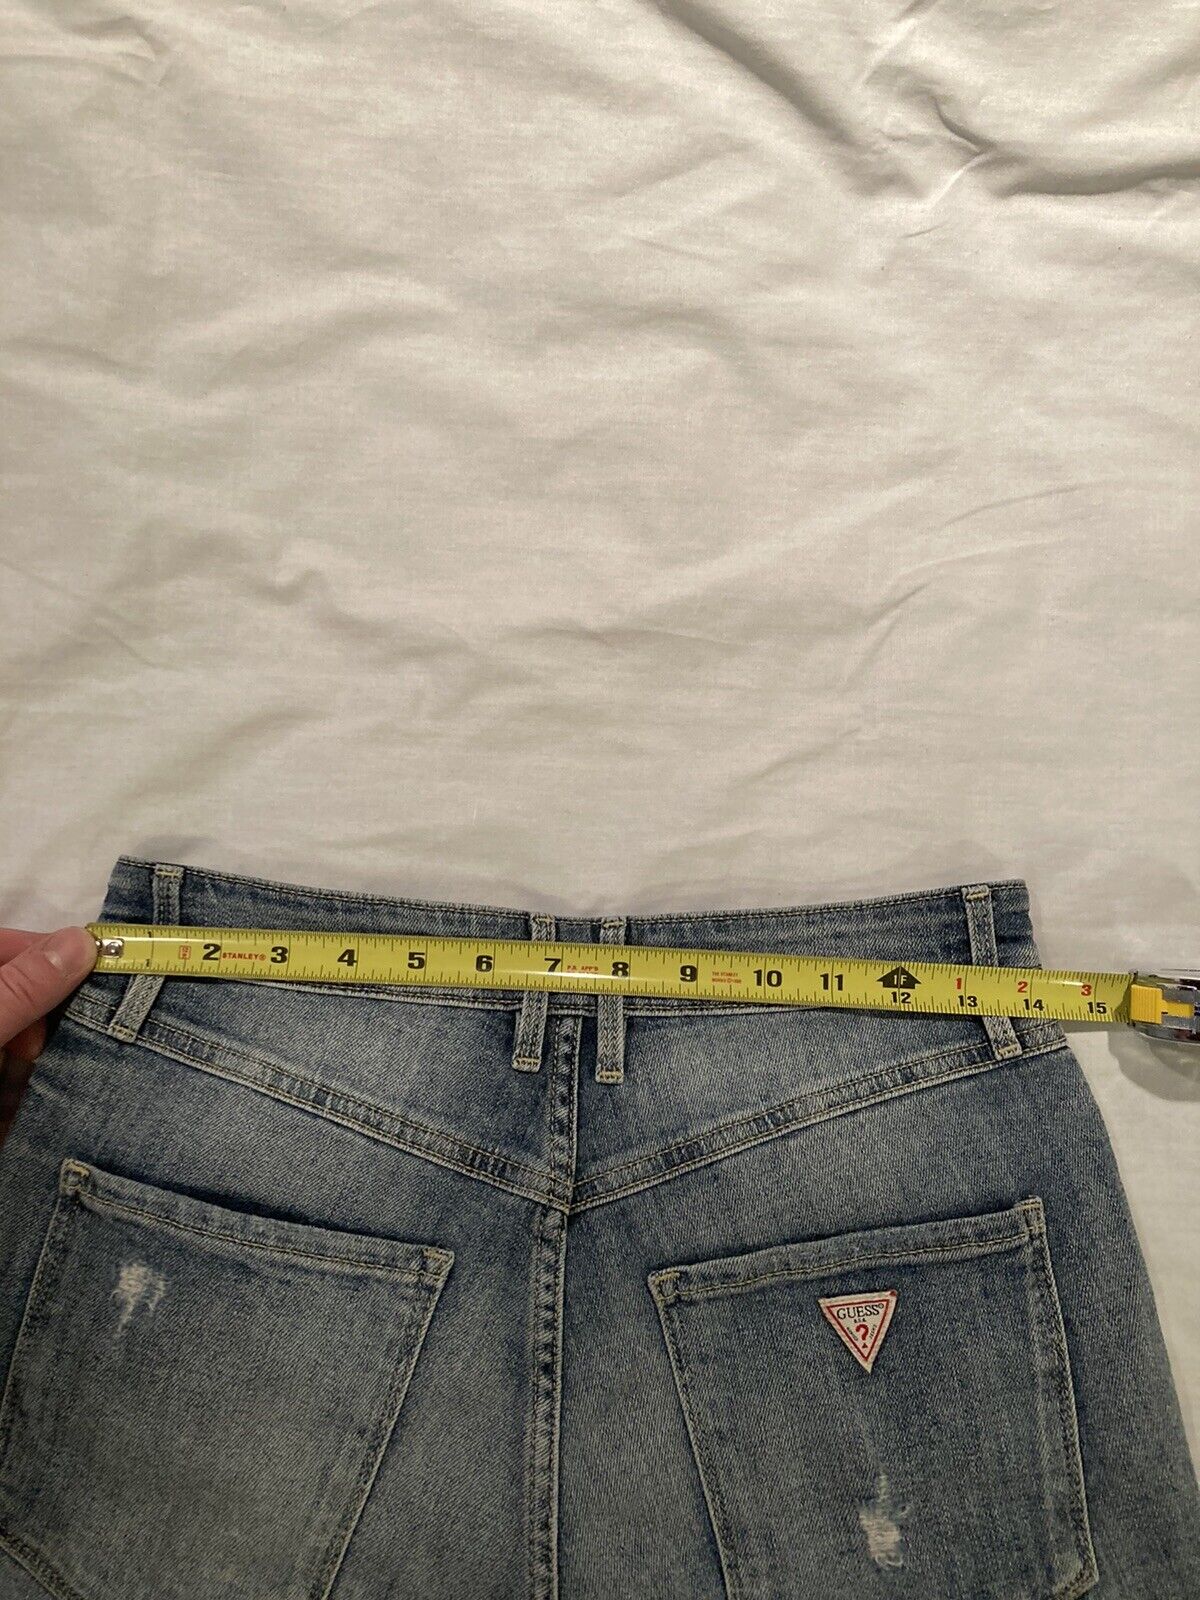 Guess Jeans Denim Shorts, size 26, Vintage! - image 5